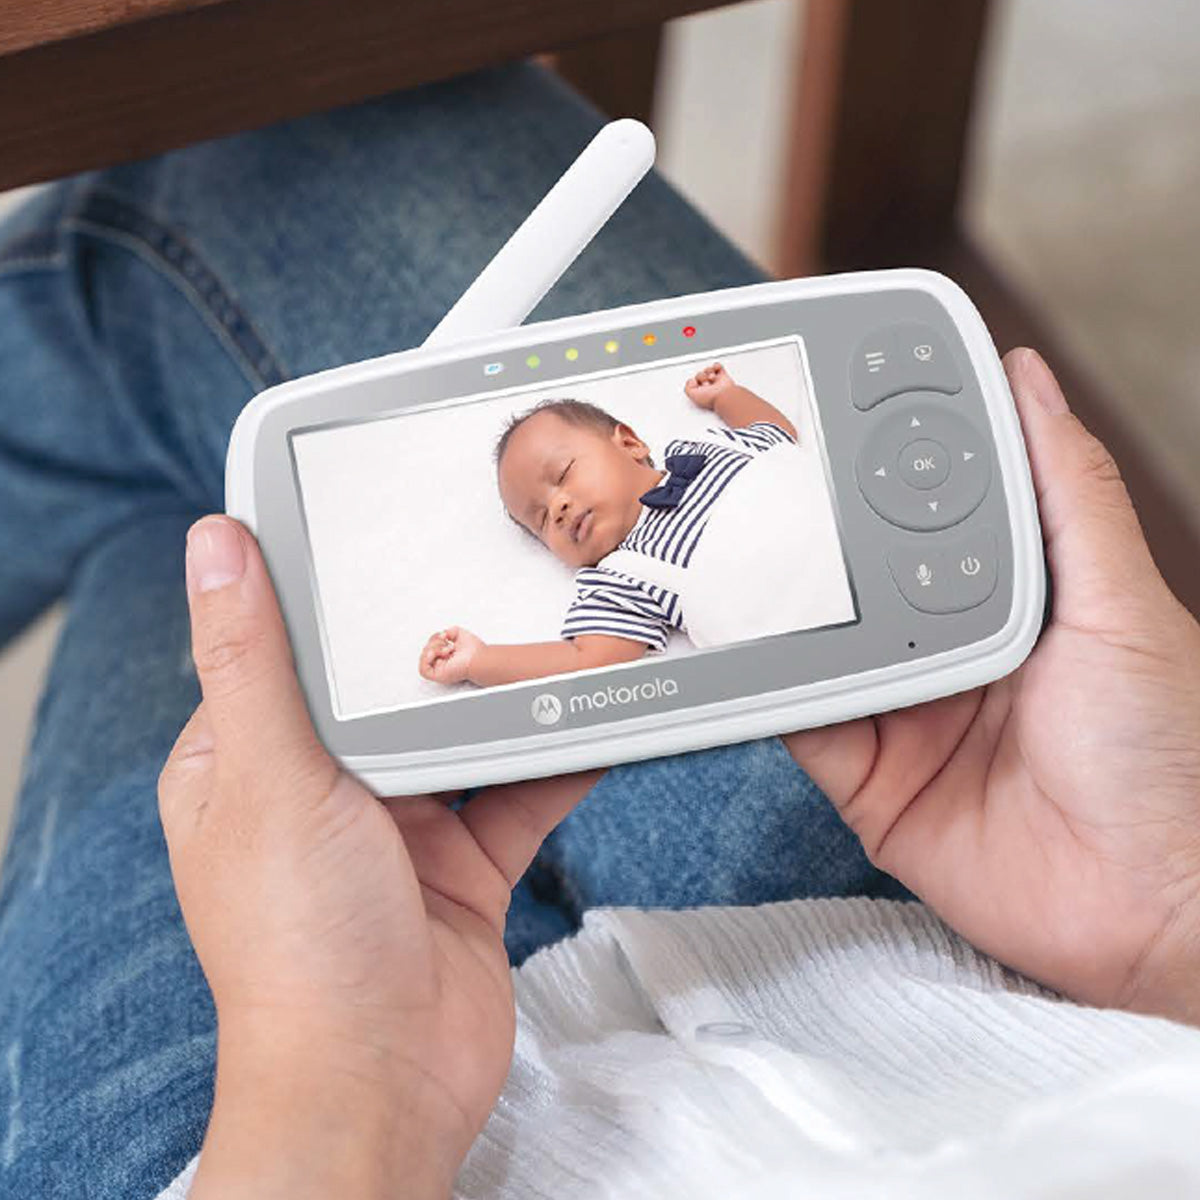 4.3” Wi-Fi Video Baby Monitor